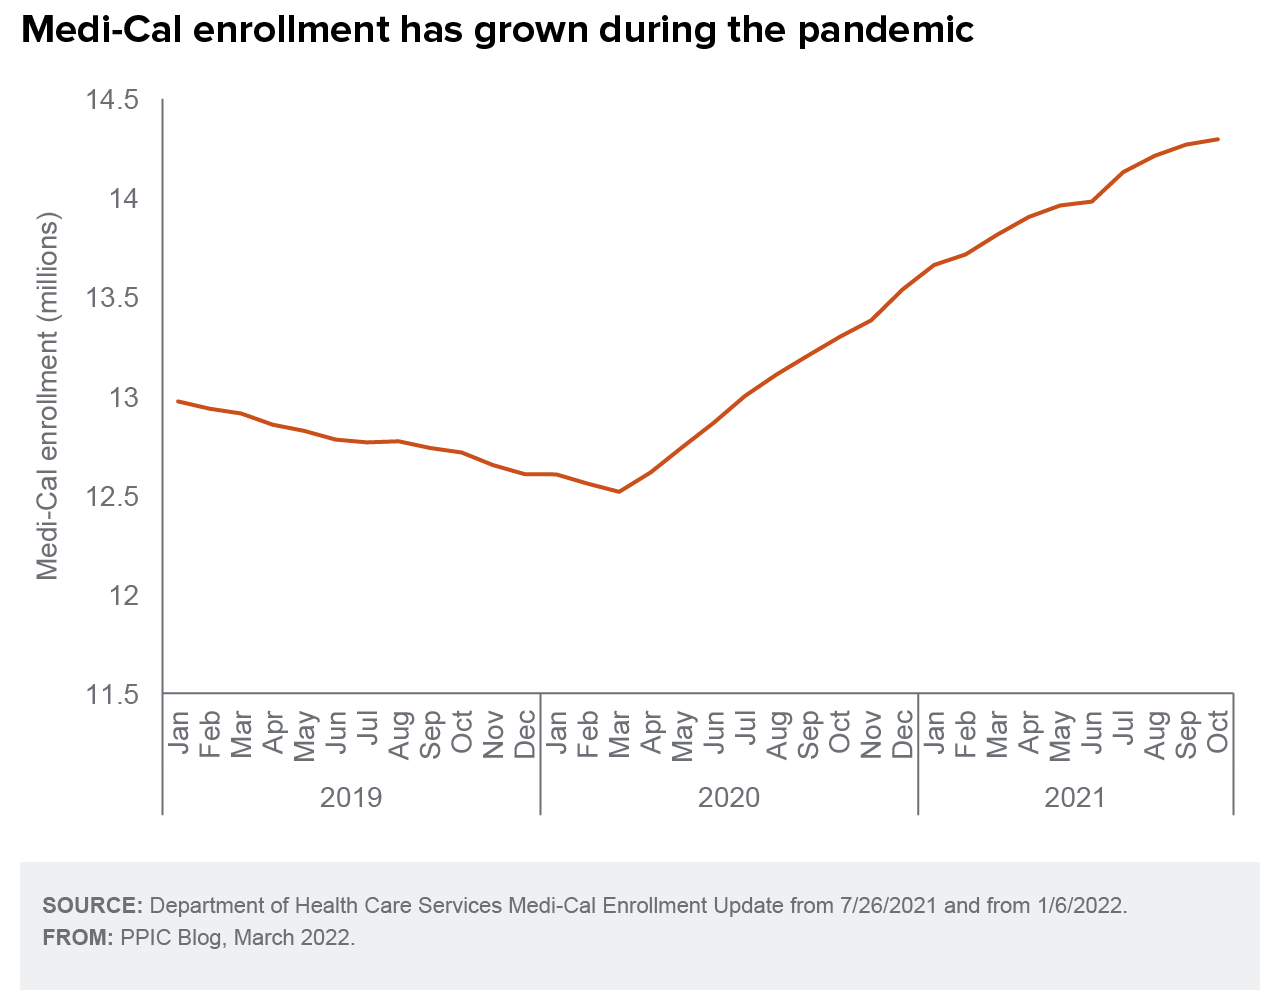 figure - Medi-Cal enrollment has grown during the pandemic